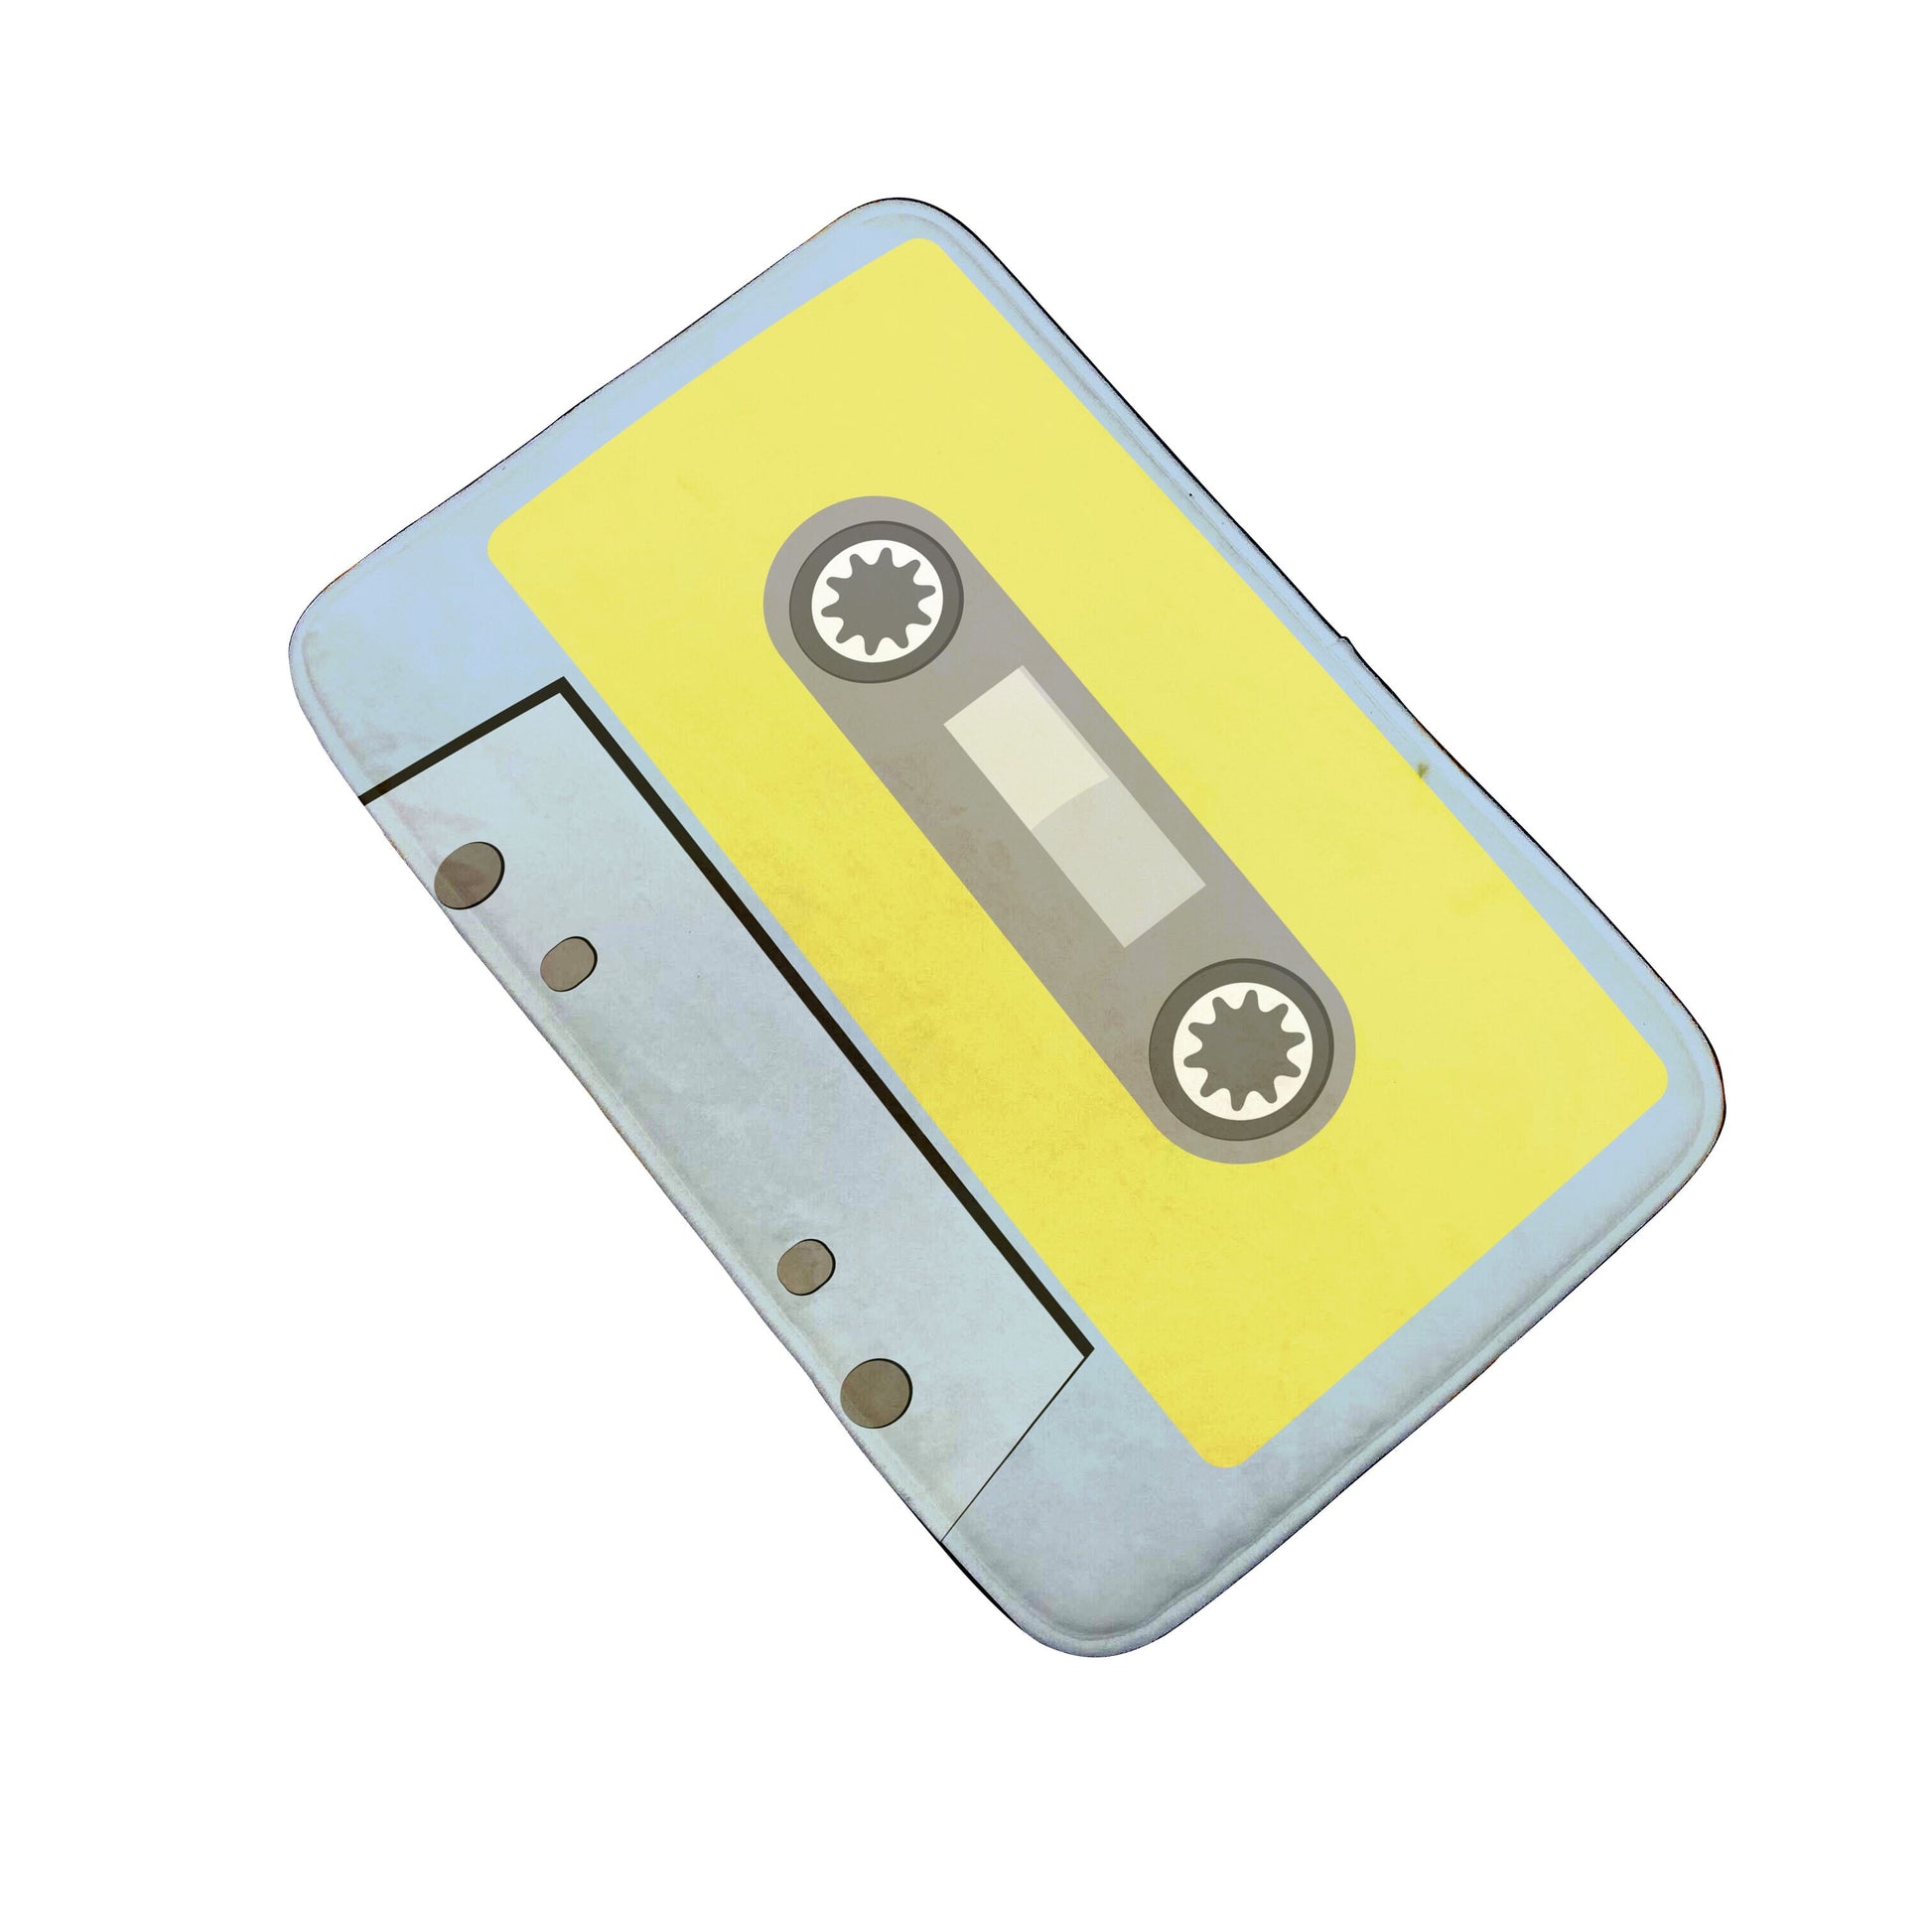 TEEK - A Bunch of Cassette Tape Rugs HOME DECOR theteekdotcom 10 15.75x23.62in 20-25 days